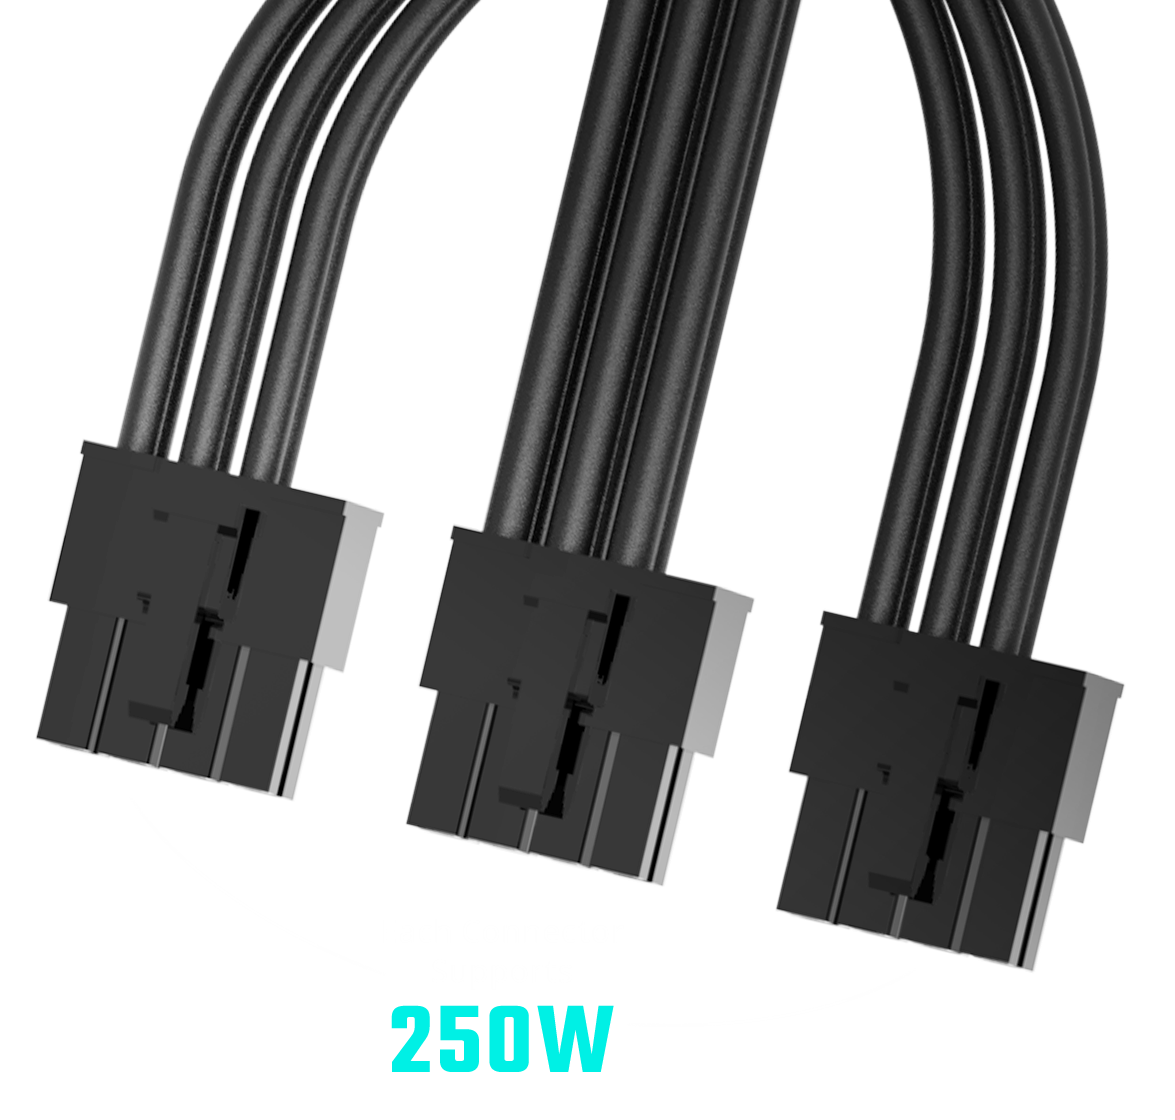 Three 8-pin connectors